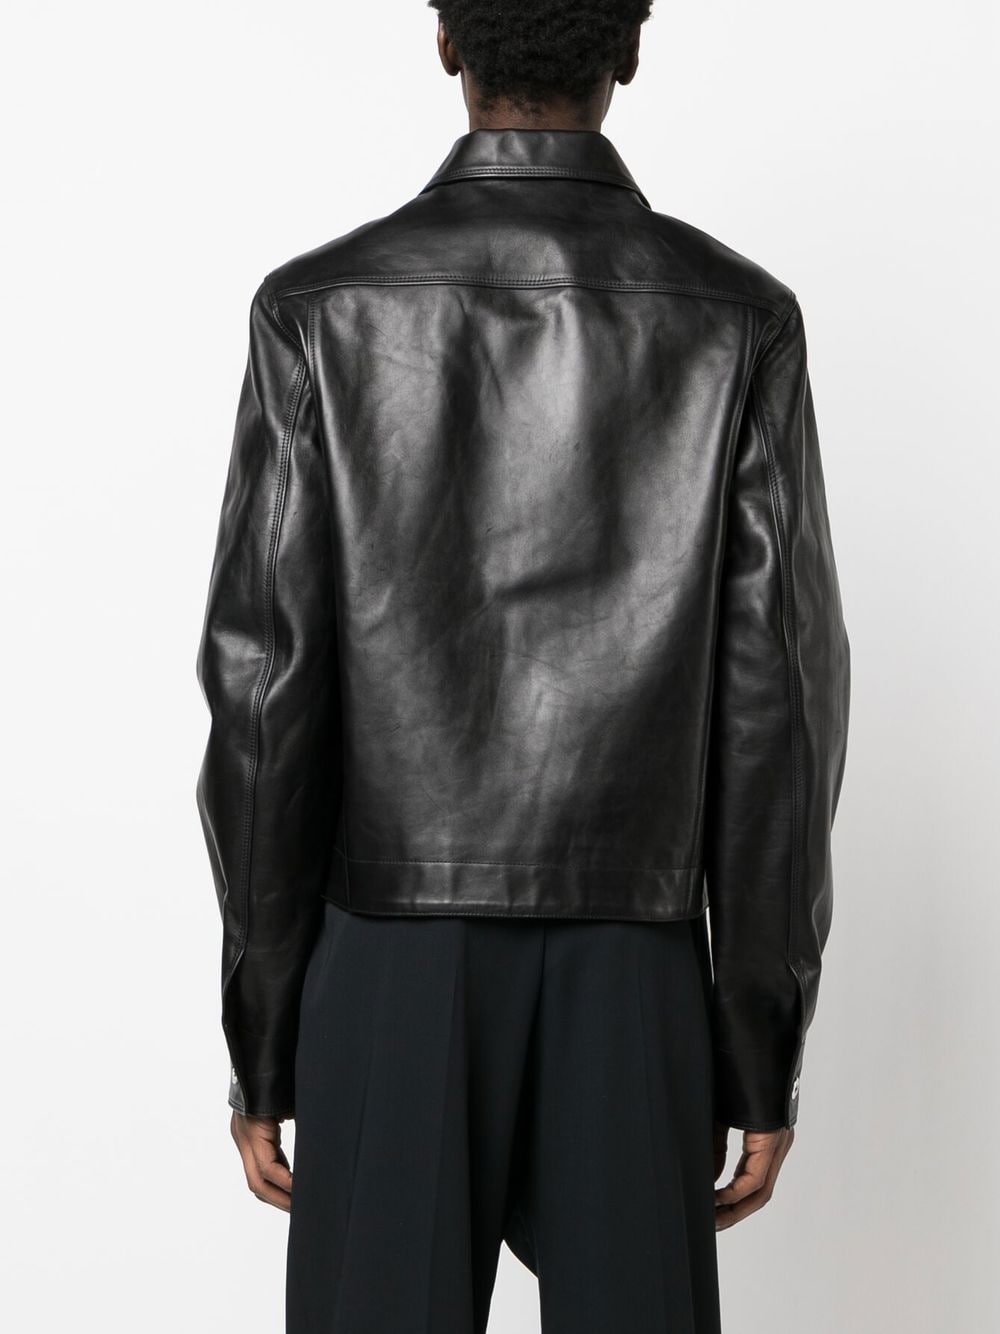 Lanvin Buttoned Leather Jacket - Farfetch